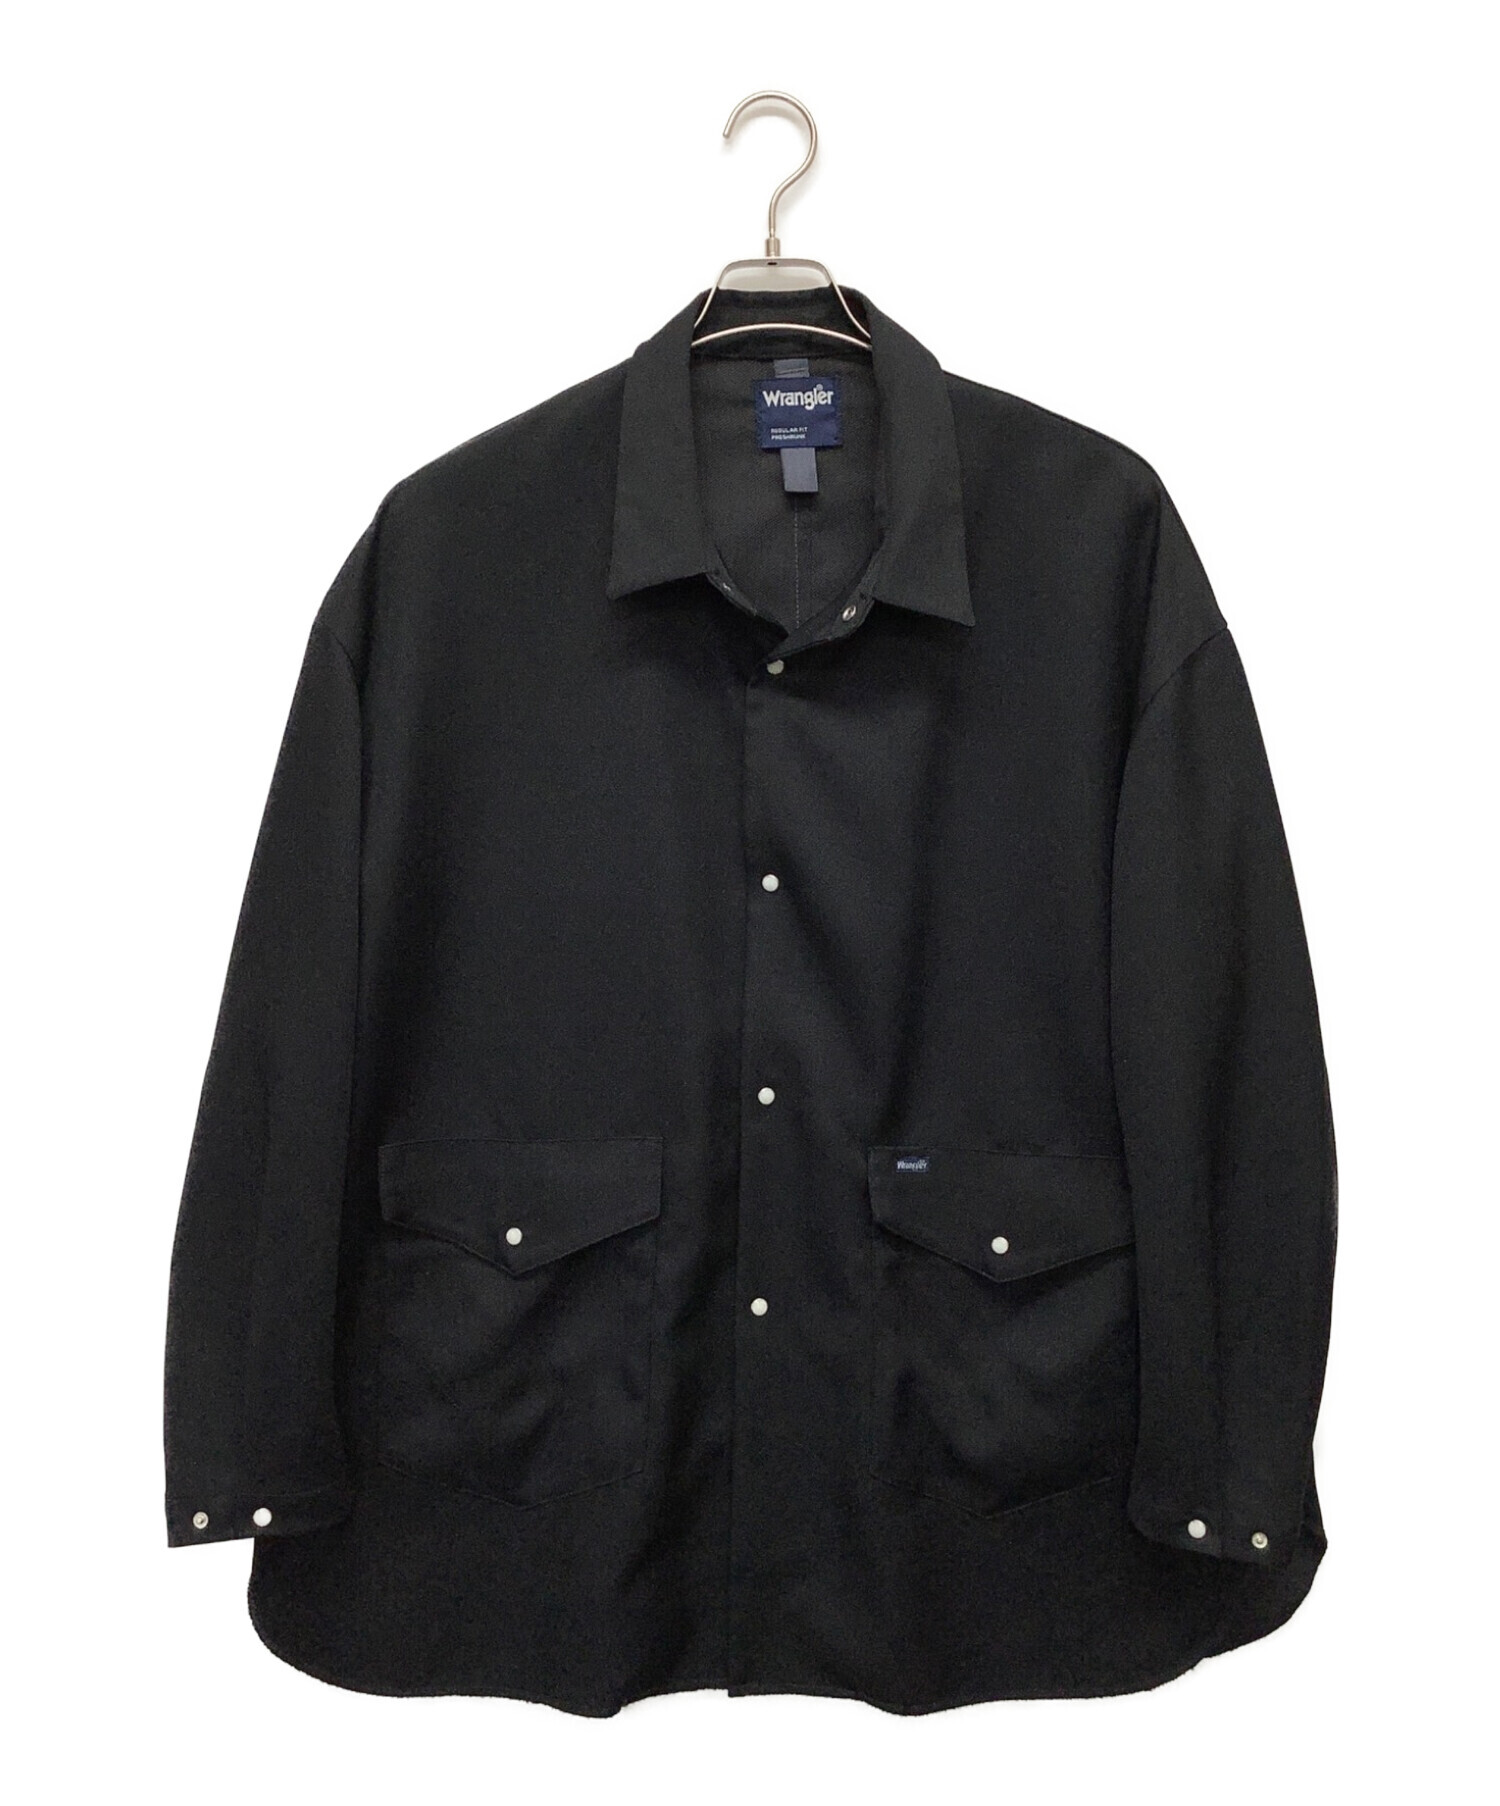 Wrangler (ラングラー) SHINYA KOZUKA (シンヤコズカ) シャツジャケット ブラック サイズ:M